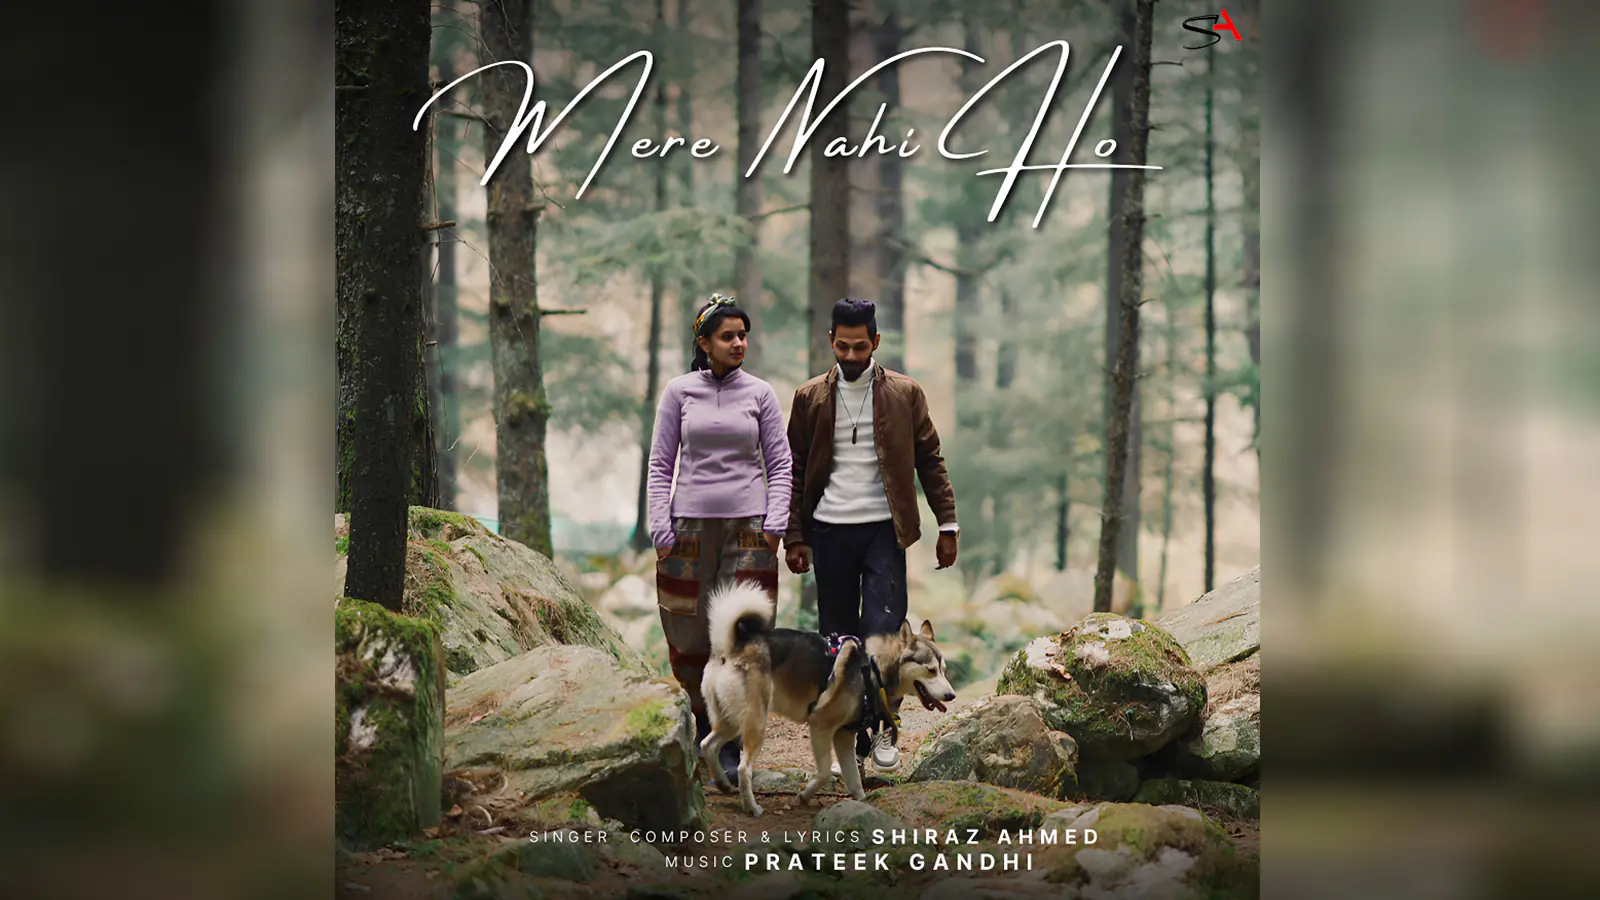 'Mere Nahi Ho' Trailer Release Tomorrow: Shiraz Ahmed's Musical Debut Sparks Anticipation